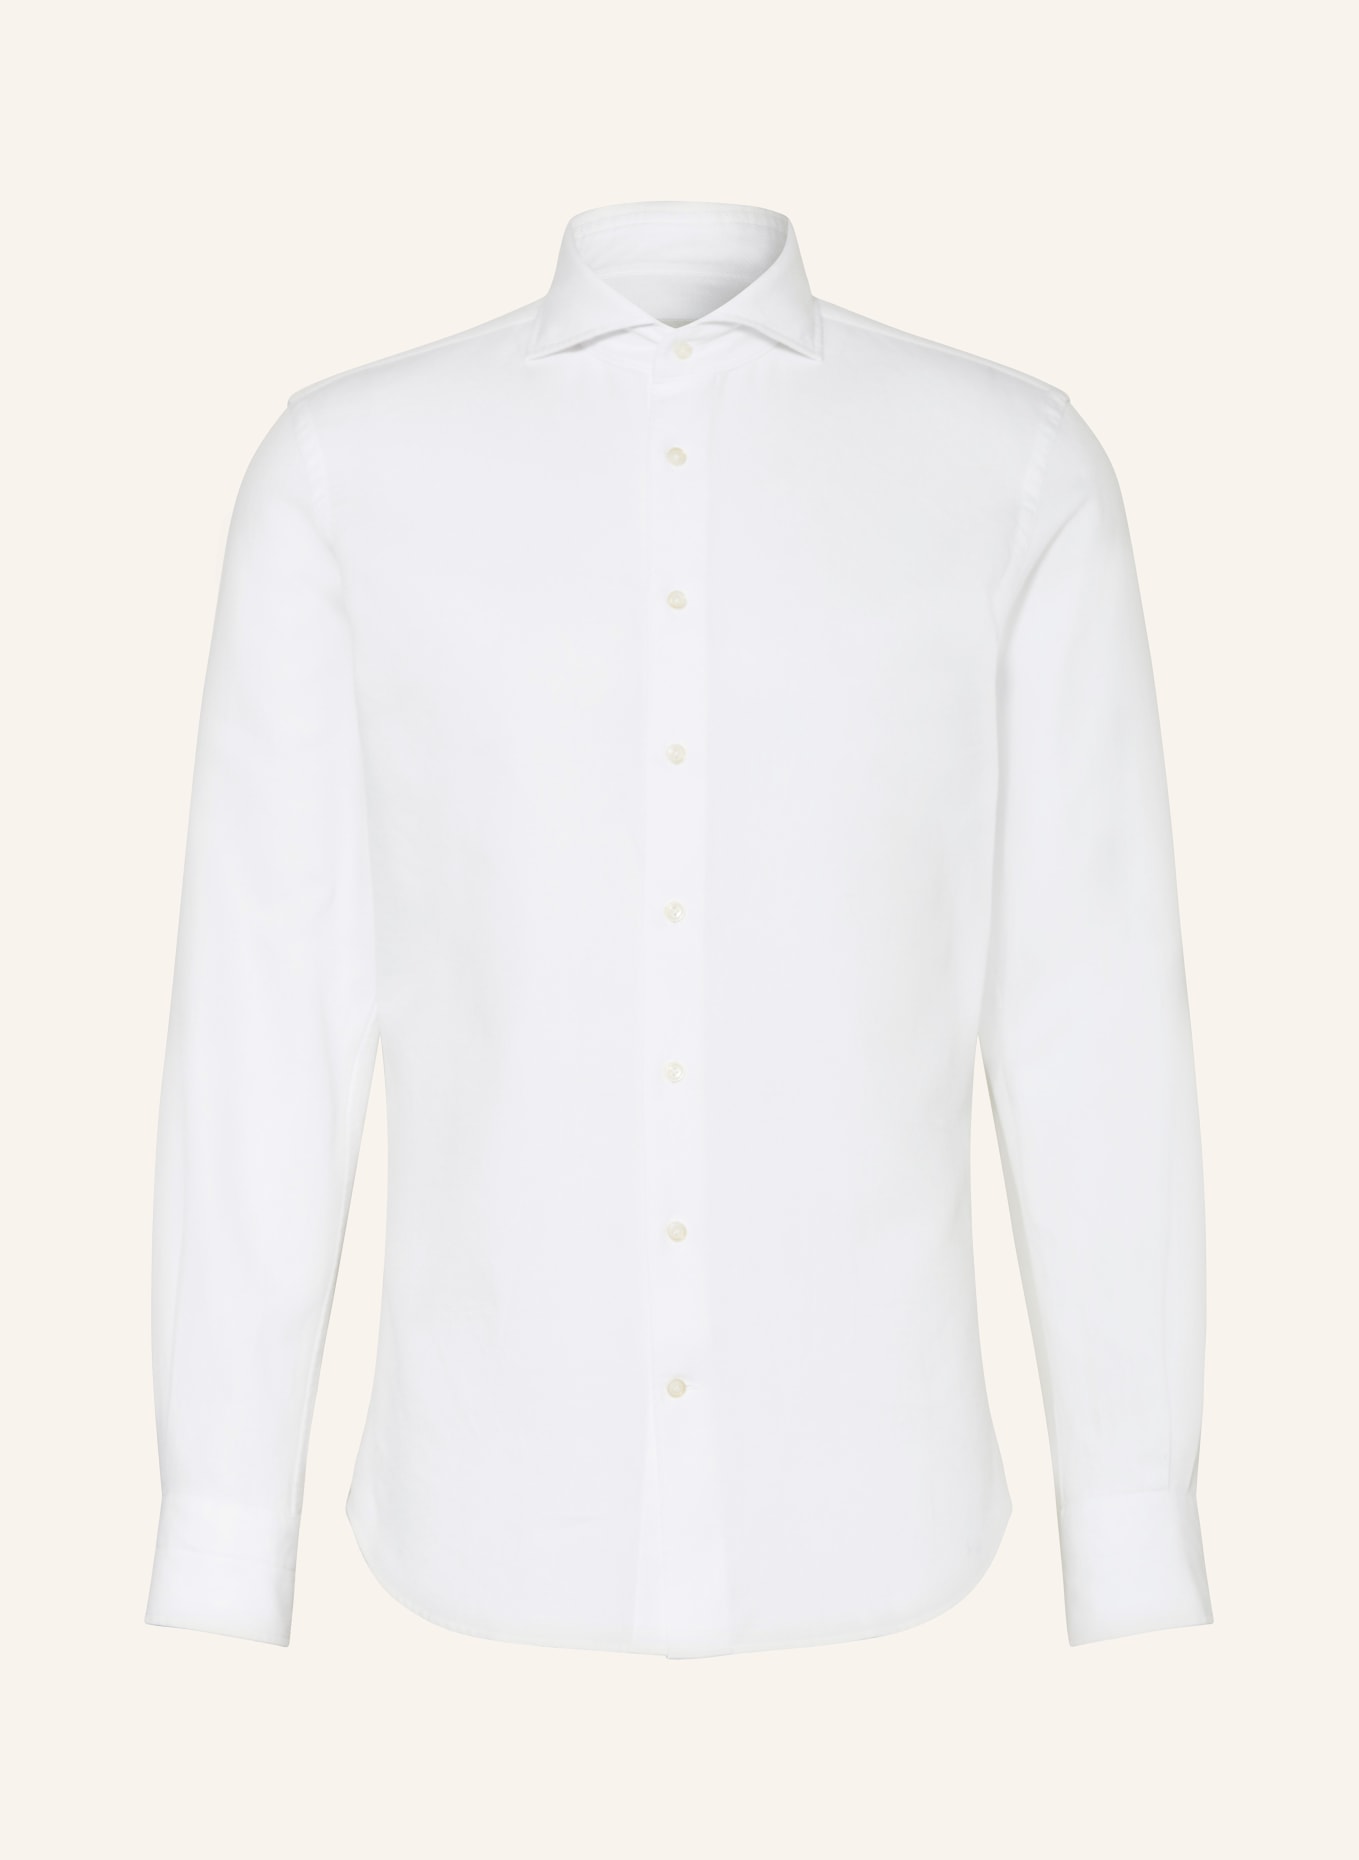 PROFUOMO Hemd Slim Fit, Farbe: WEISS (Bild 1)